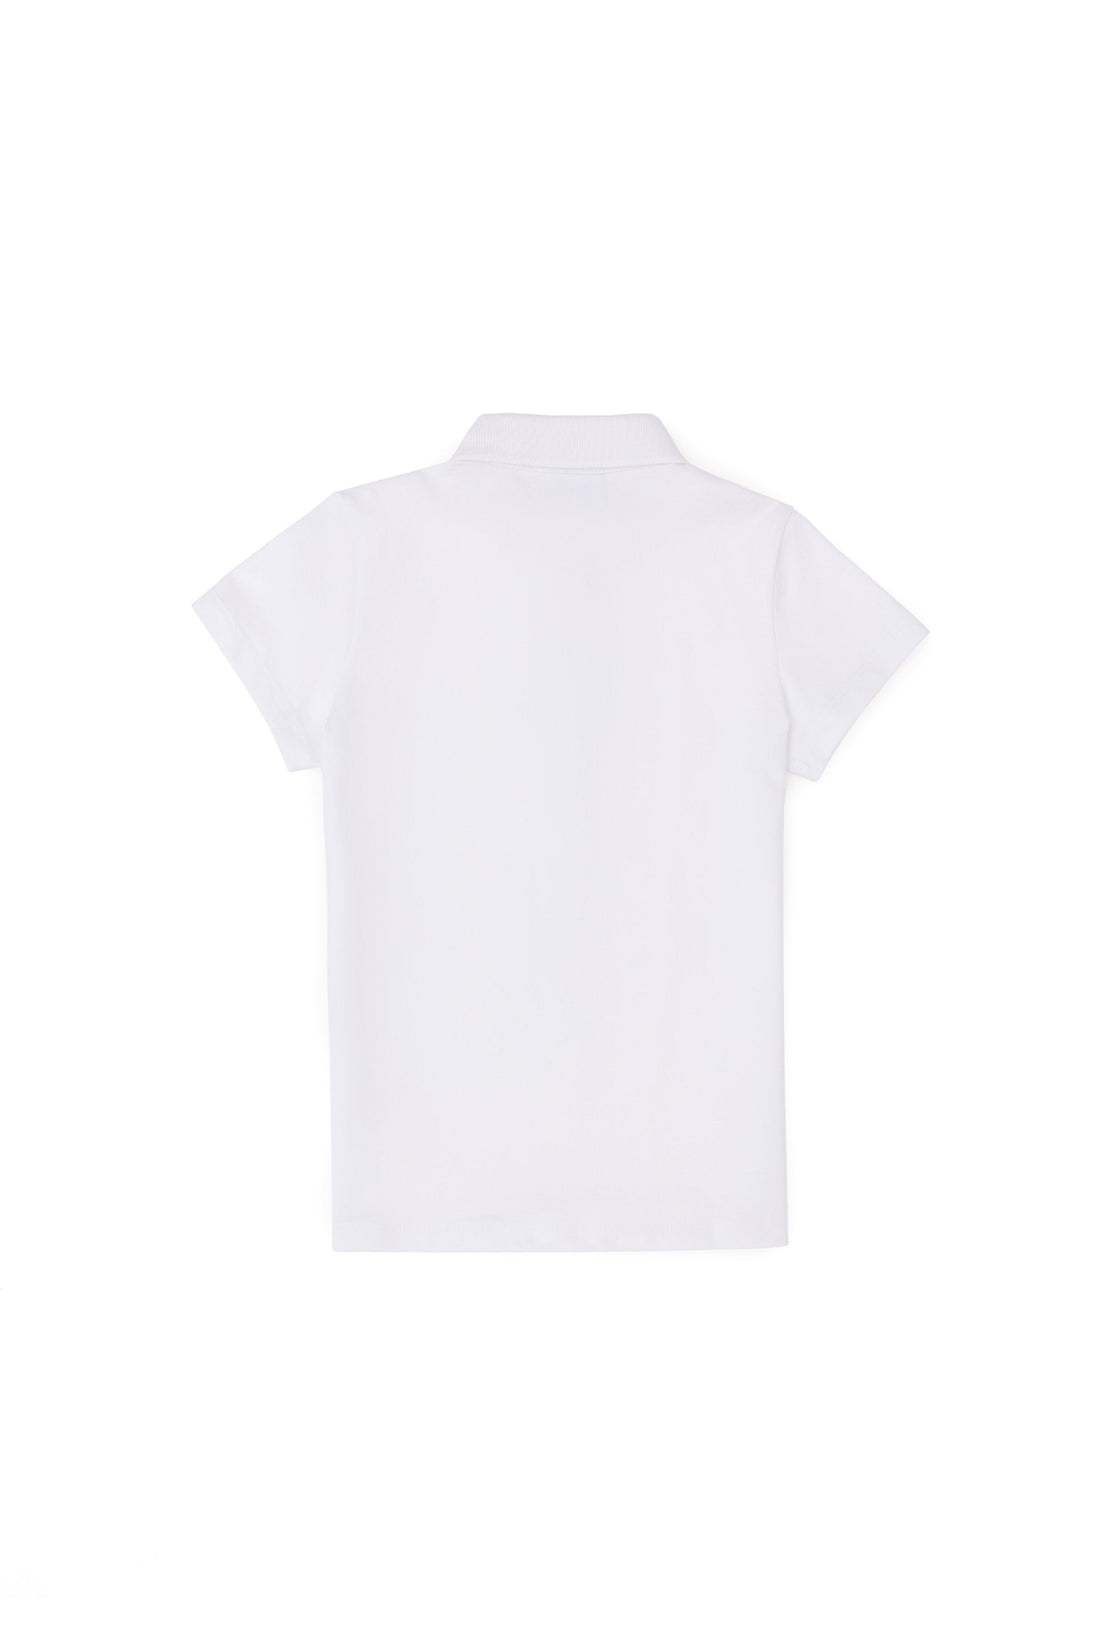 Girls White T-Shirt_G084SZ0110 1834393_VR013_02